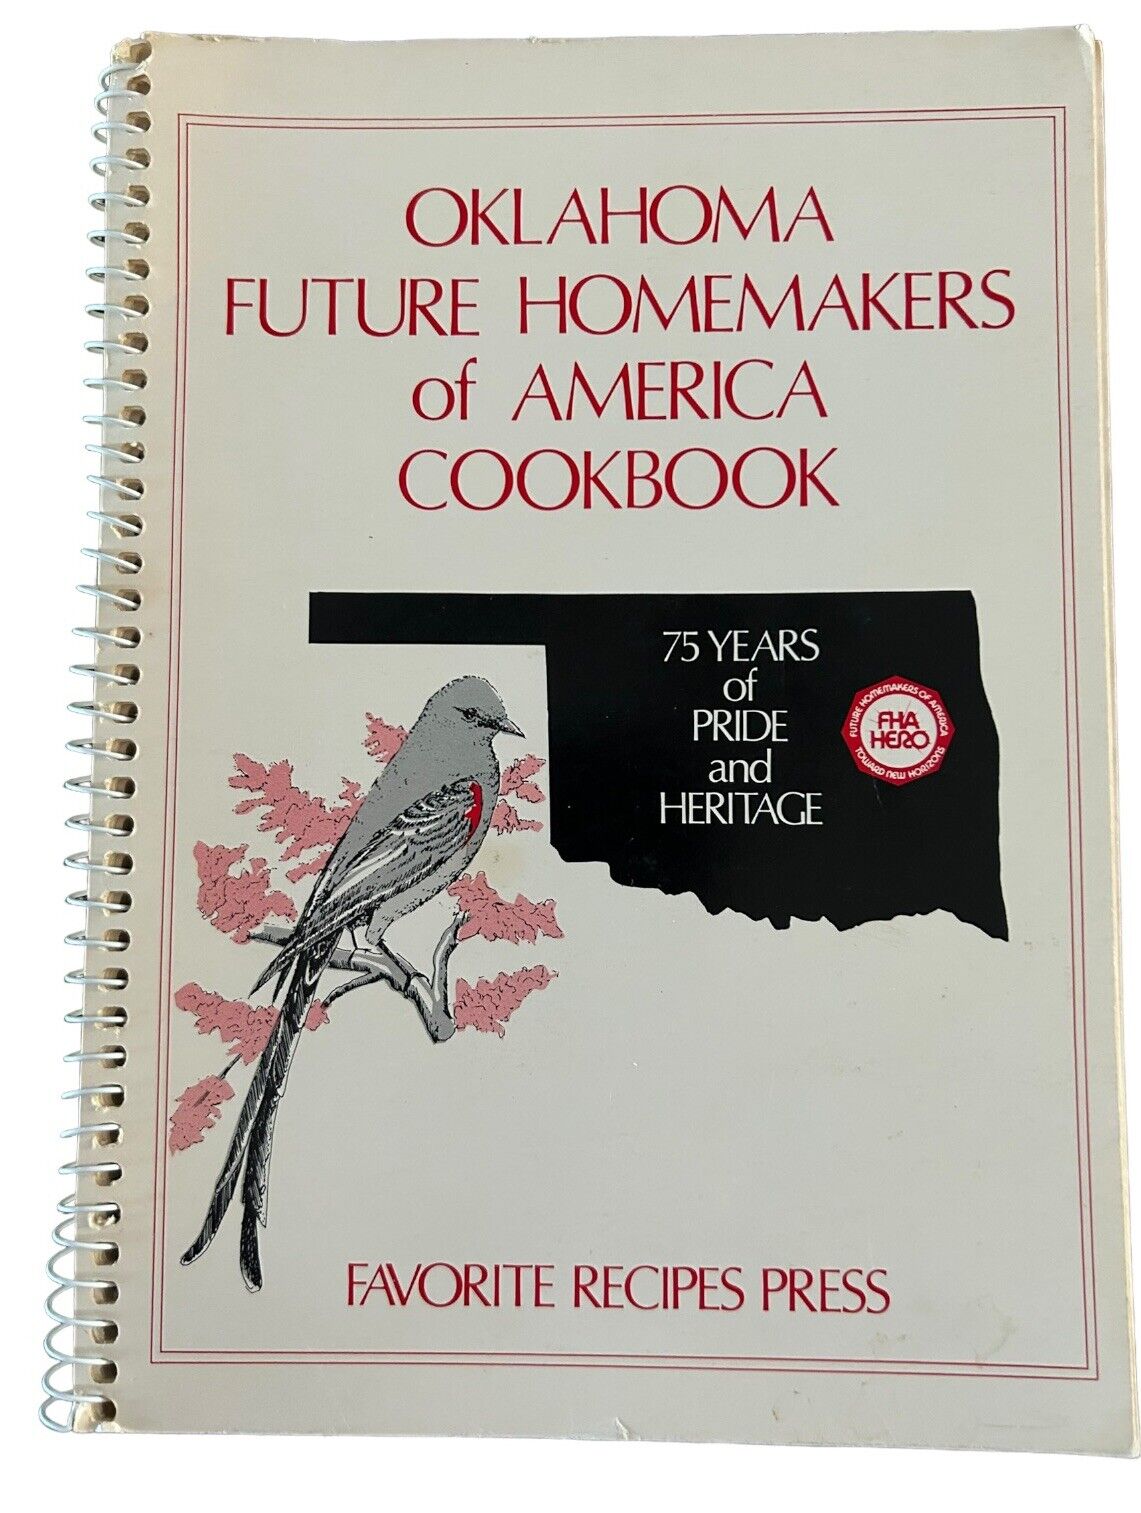 Oklahoma Future Homemakers of America Cookbook 1984 OK HERO FHA 75th Anniversary